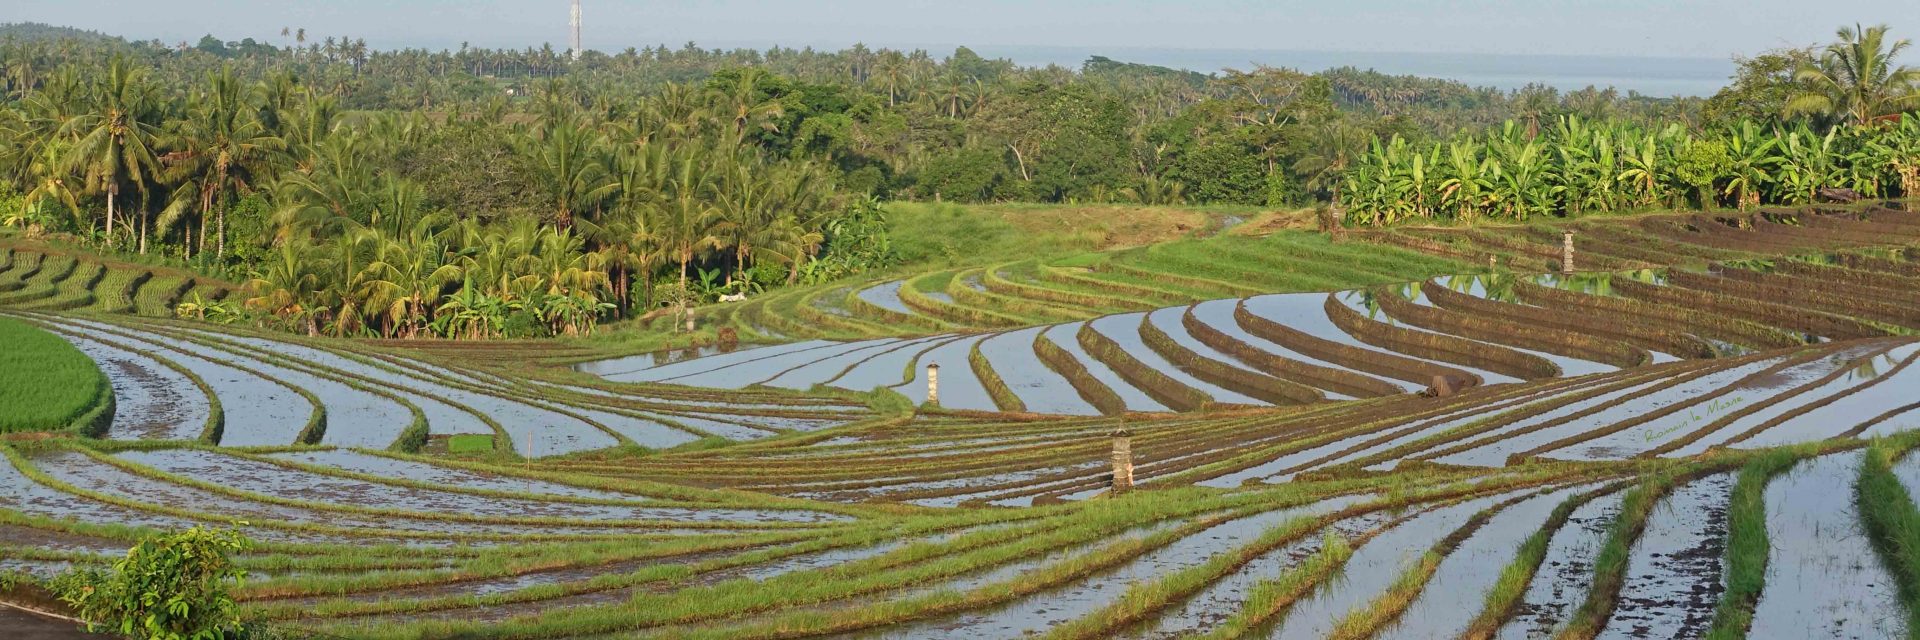 Rice Field - Bali